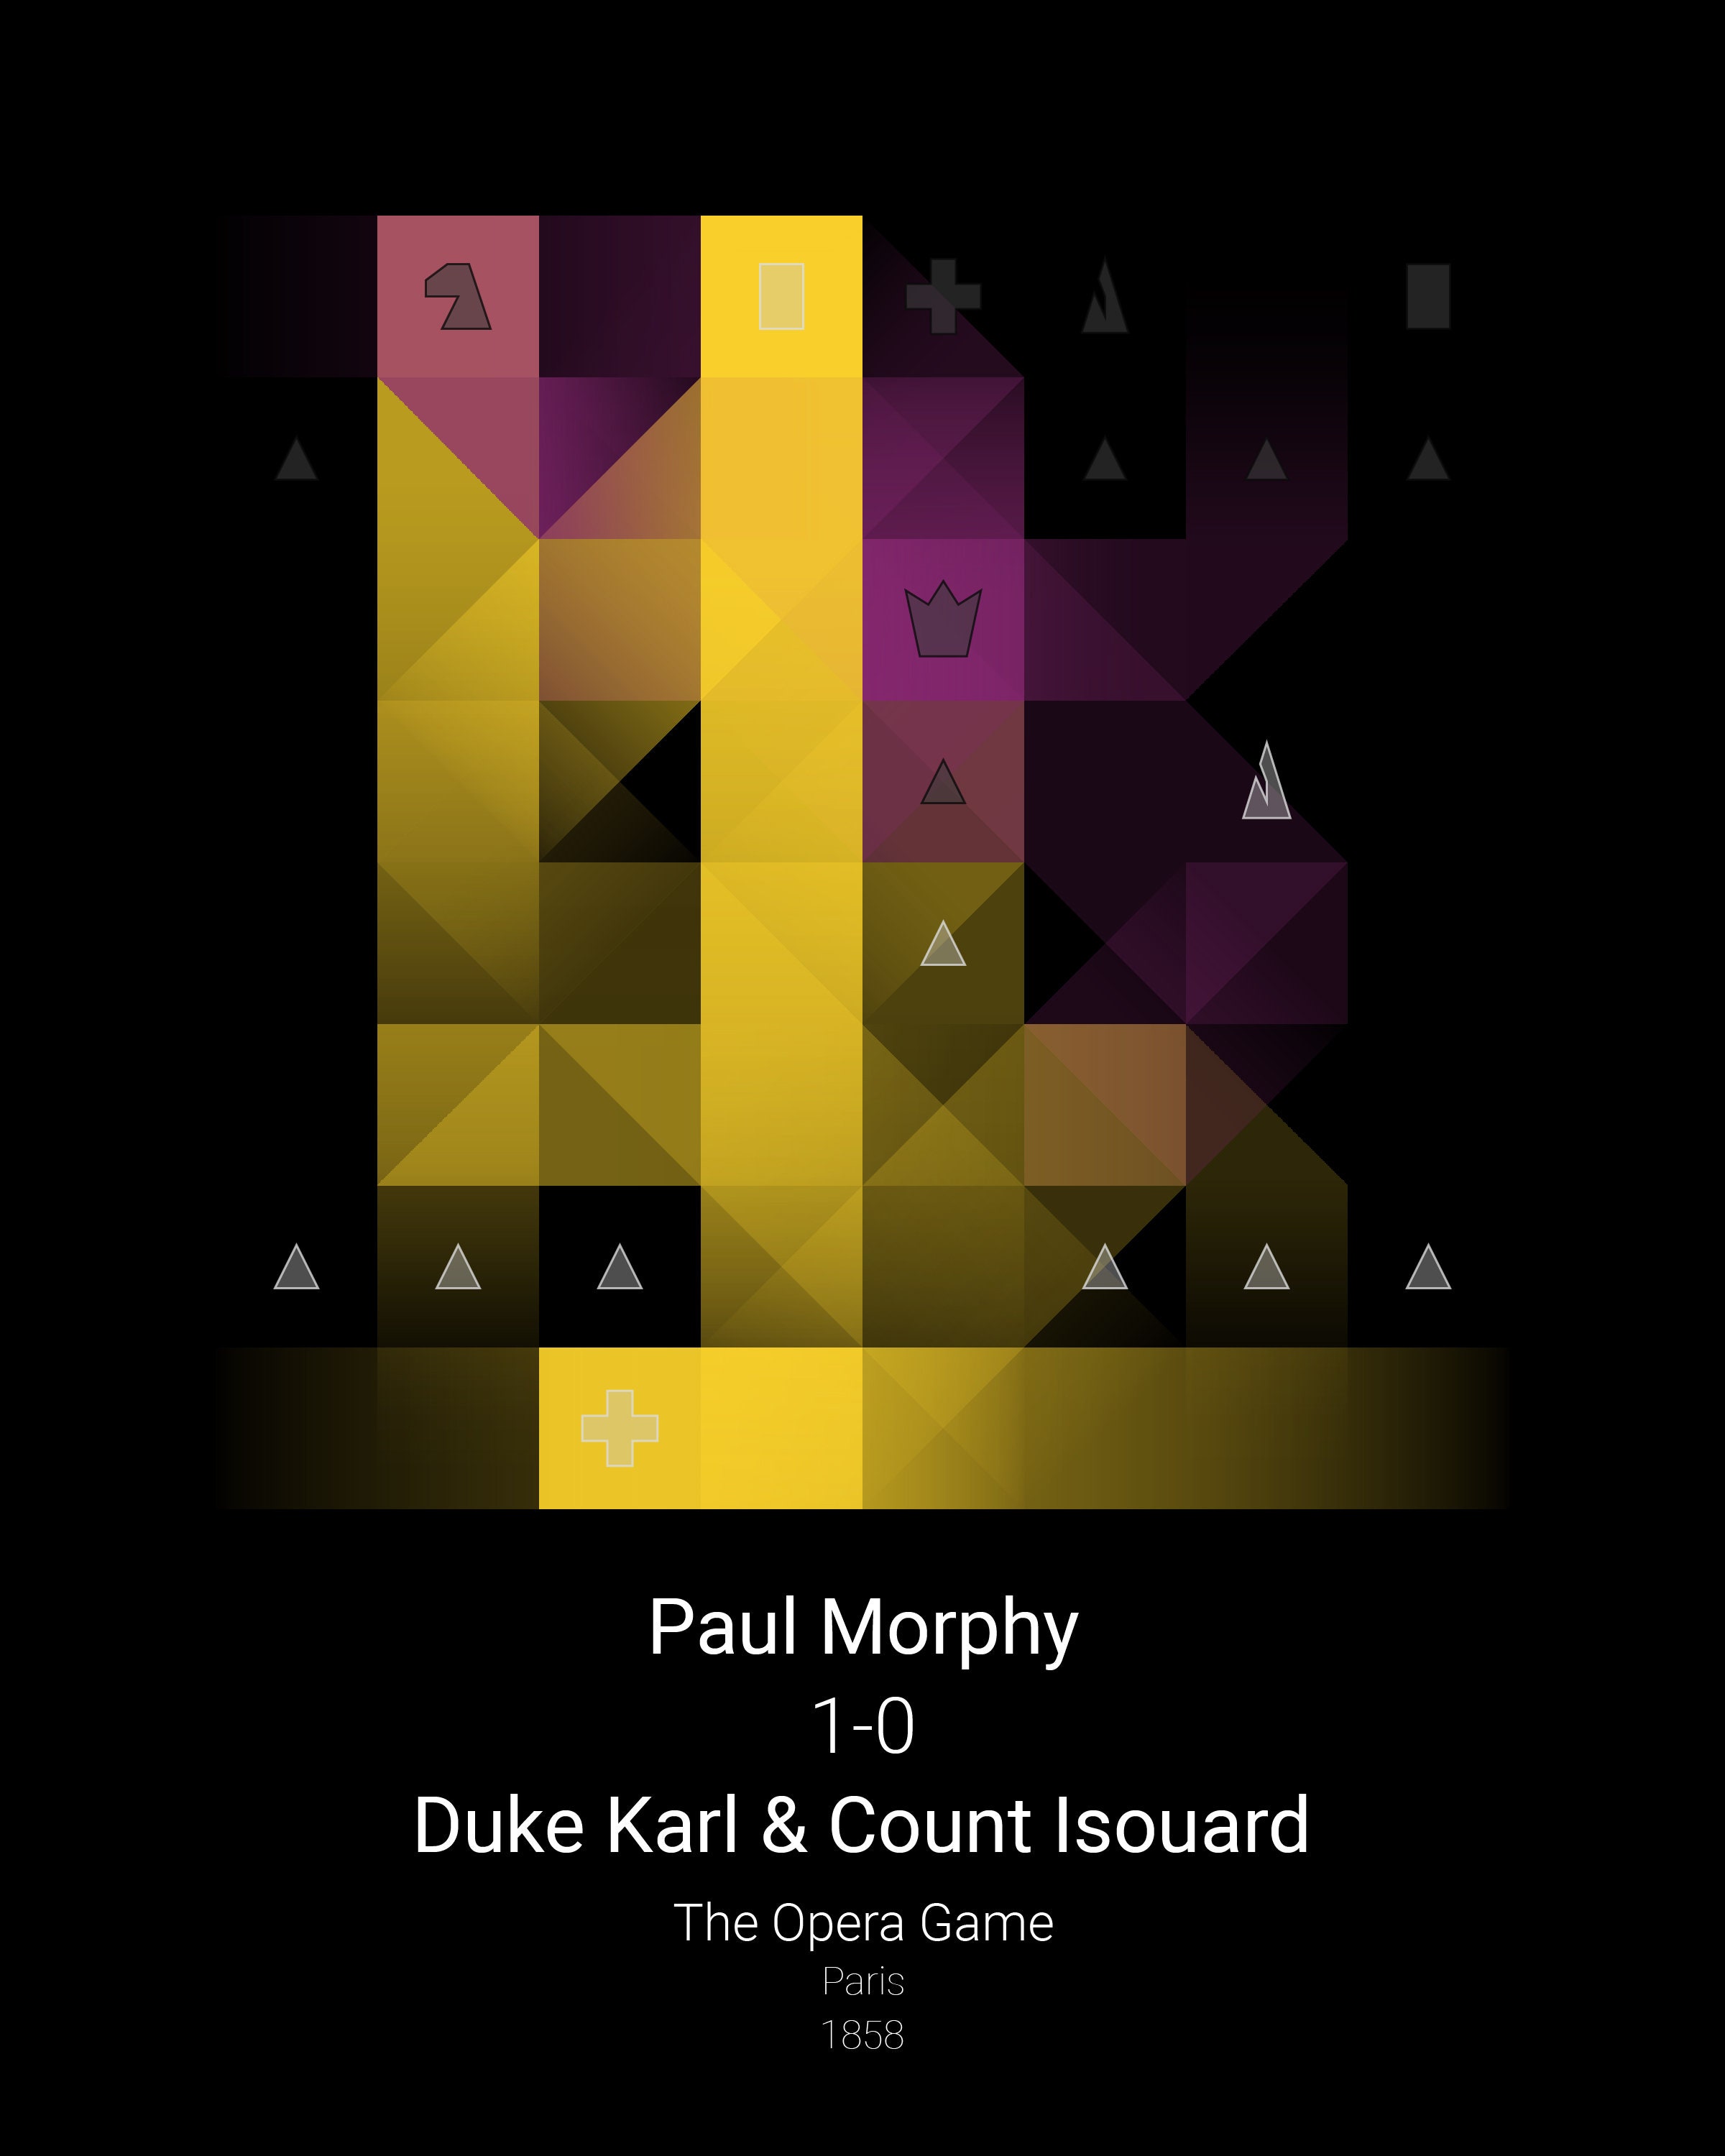 Paul Morphy's Immortal Opera Game 